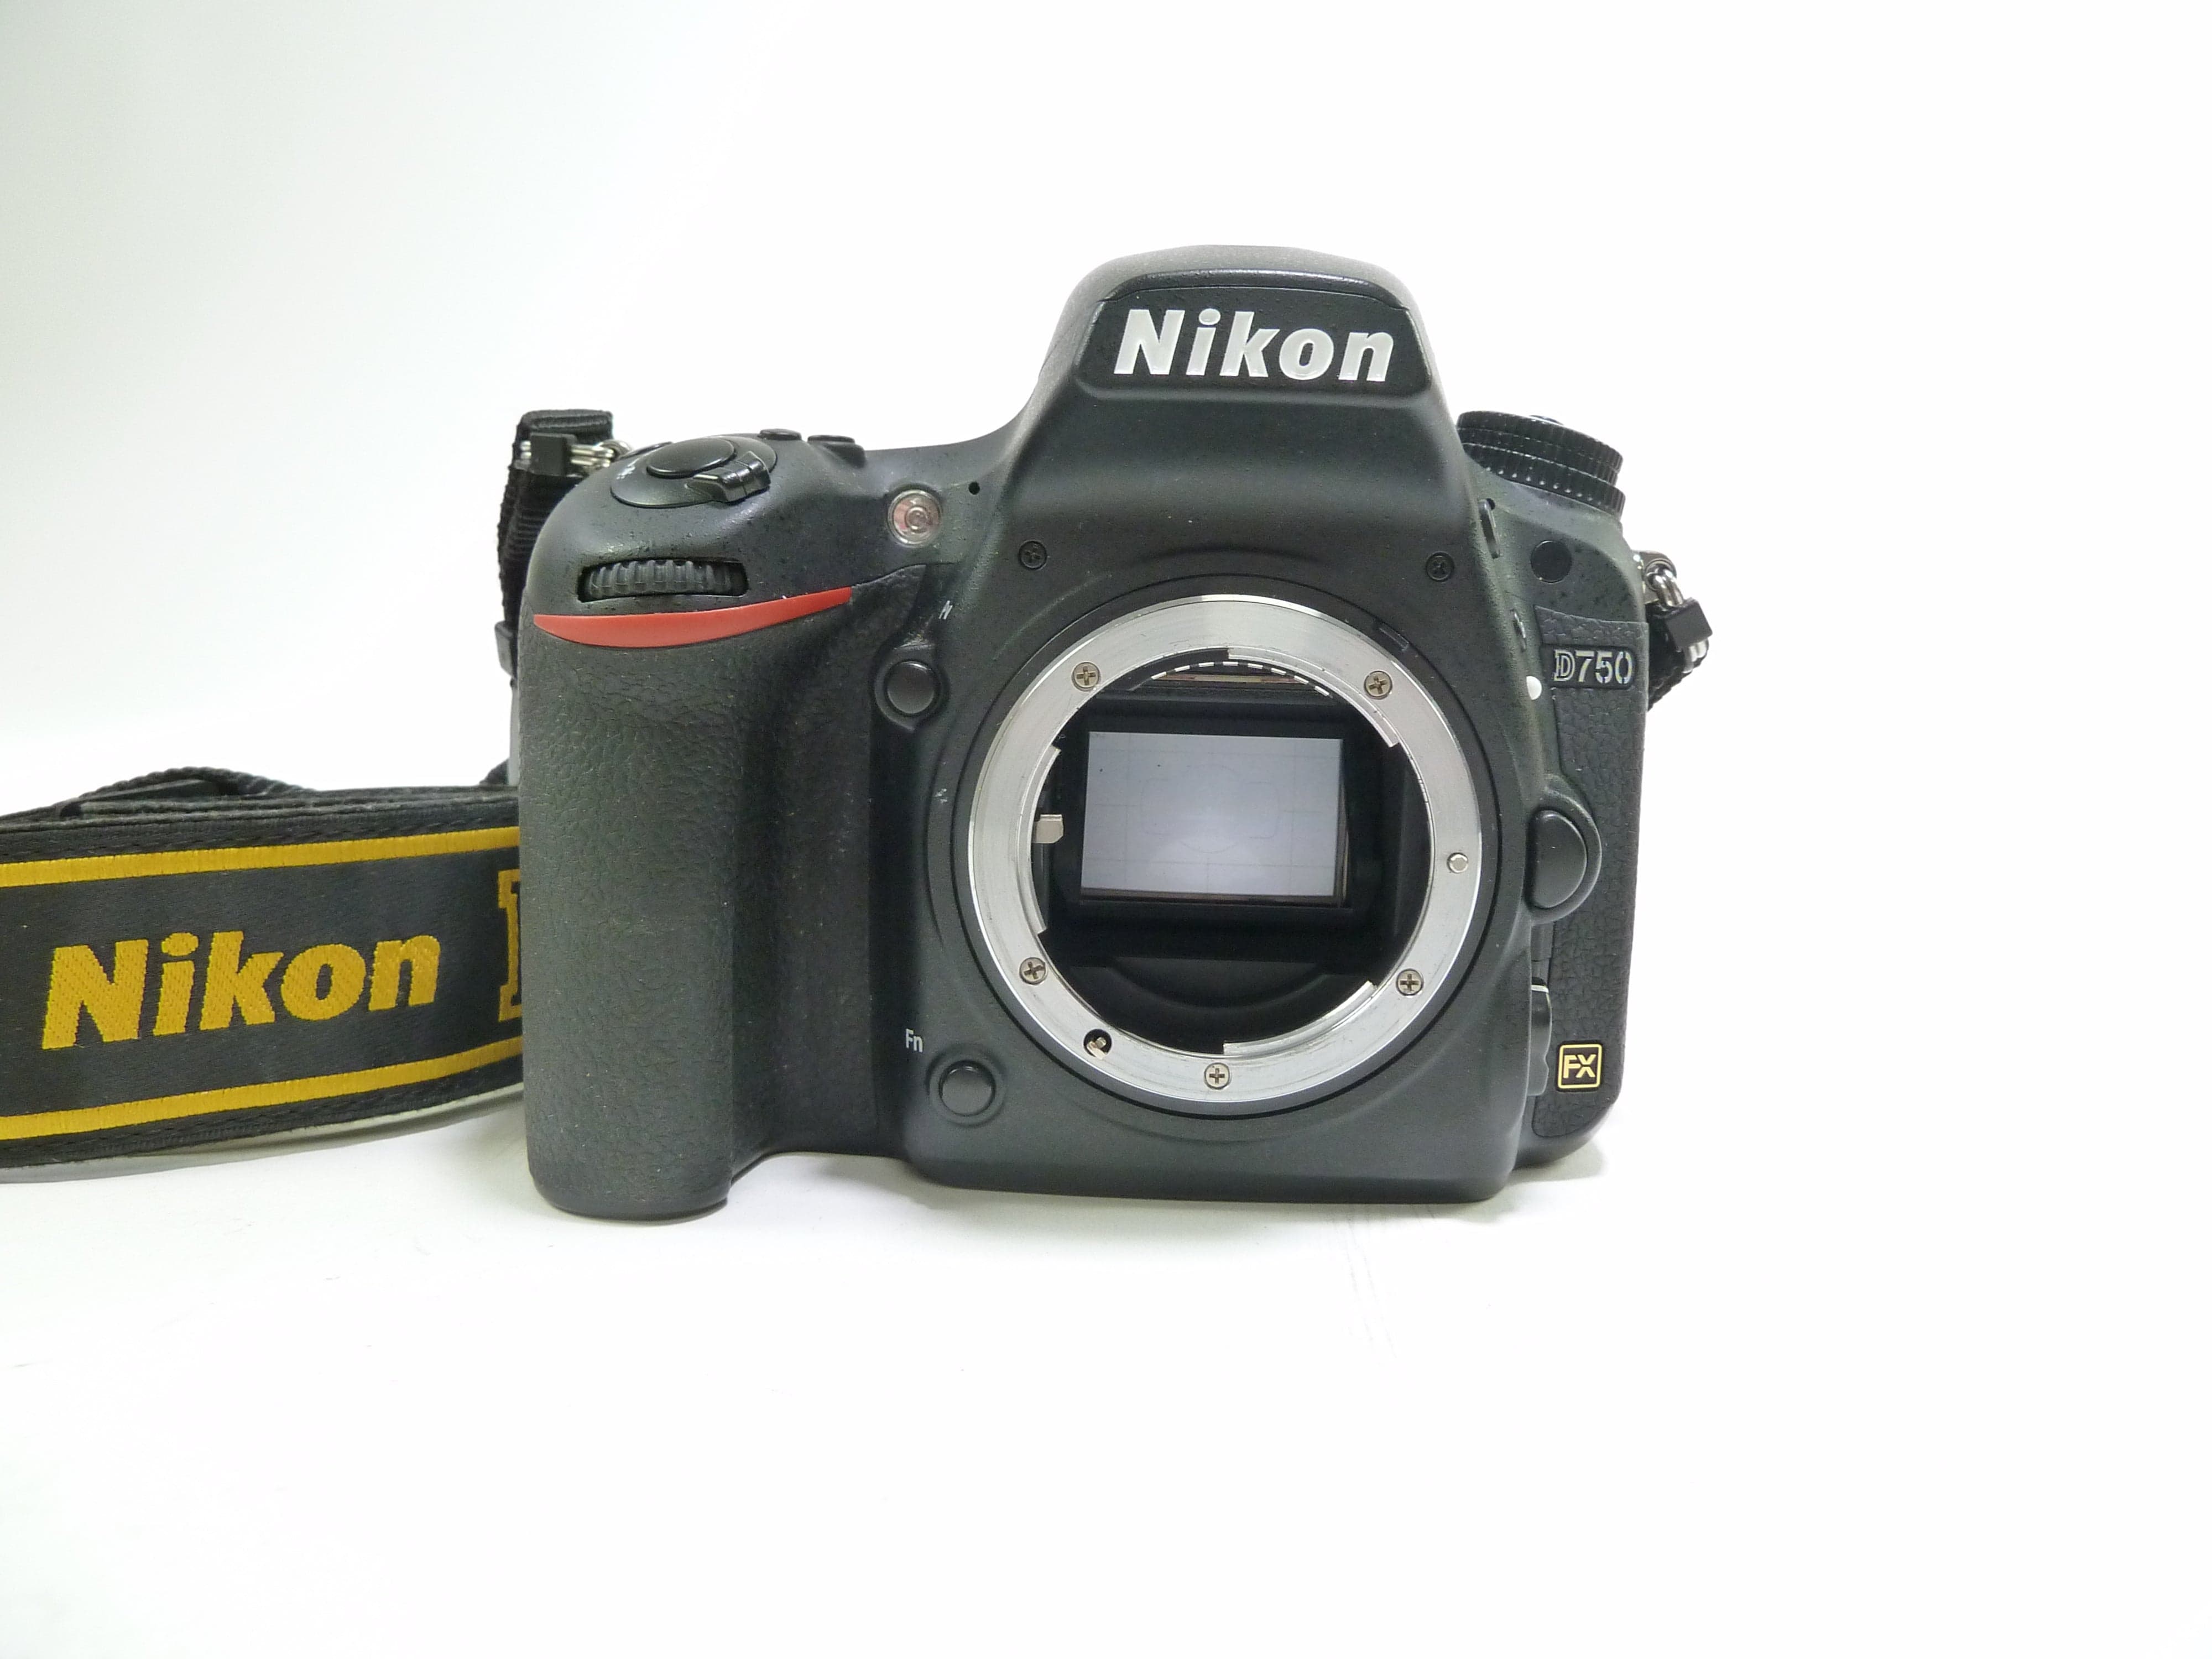 Nikon D750 DSLR Camera Body Only